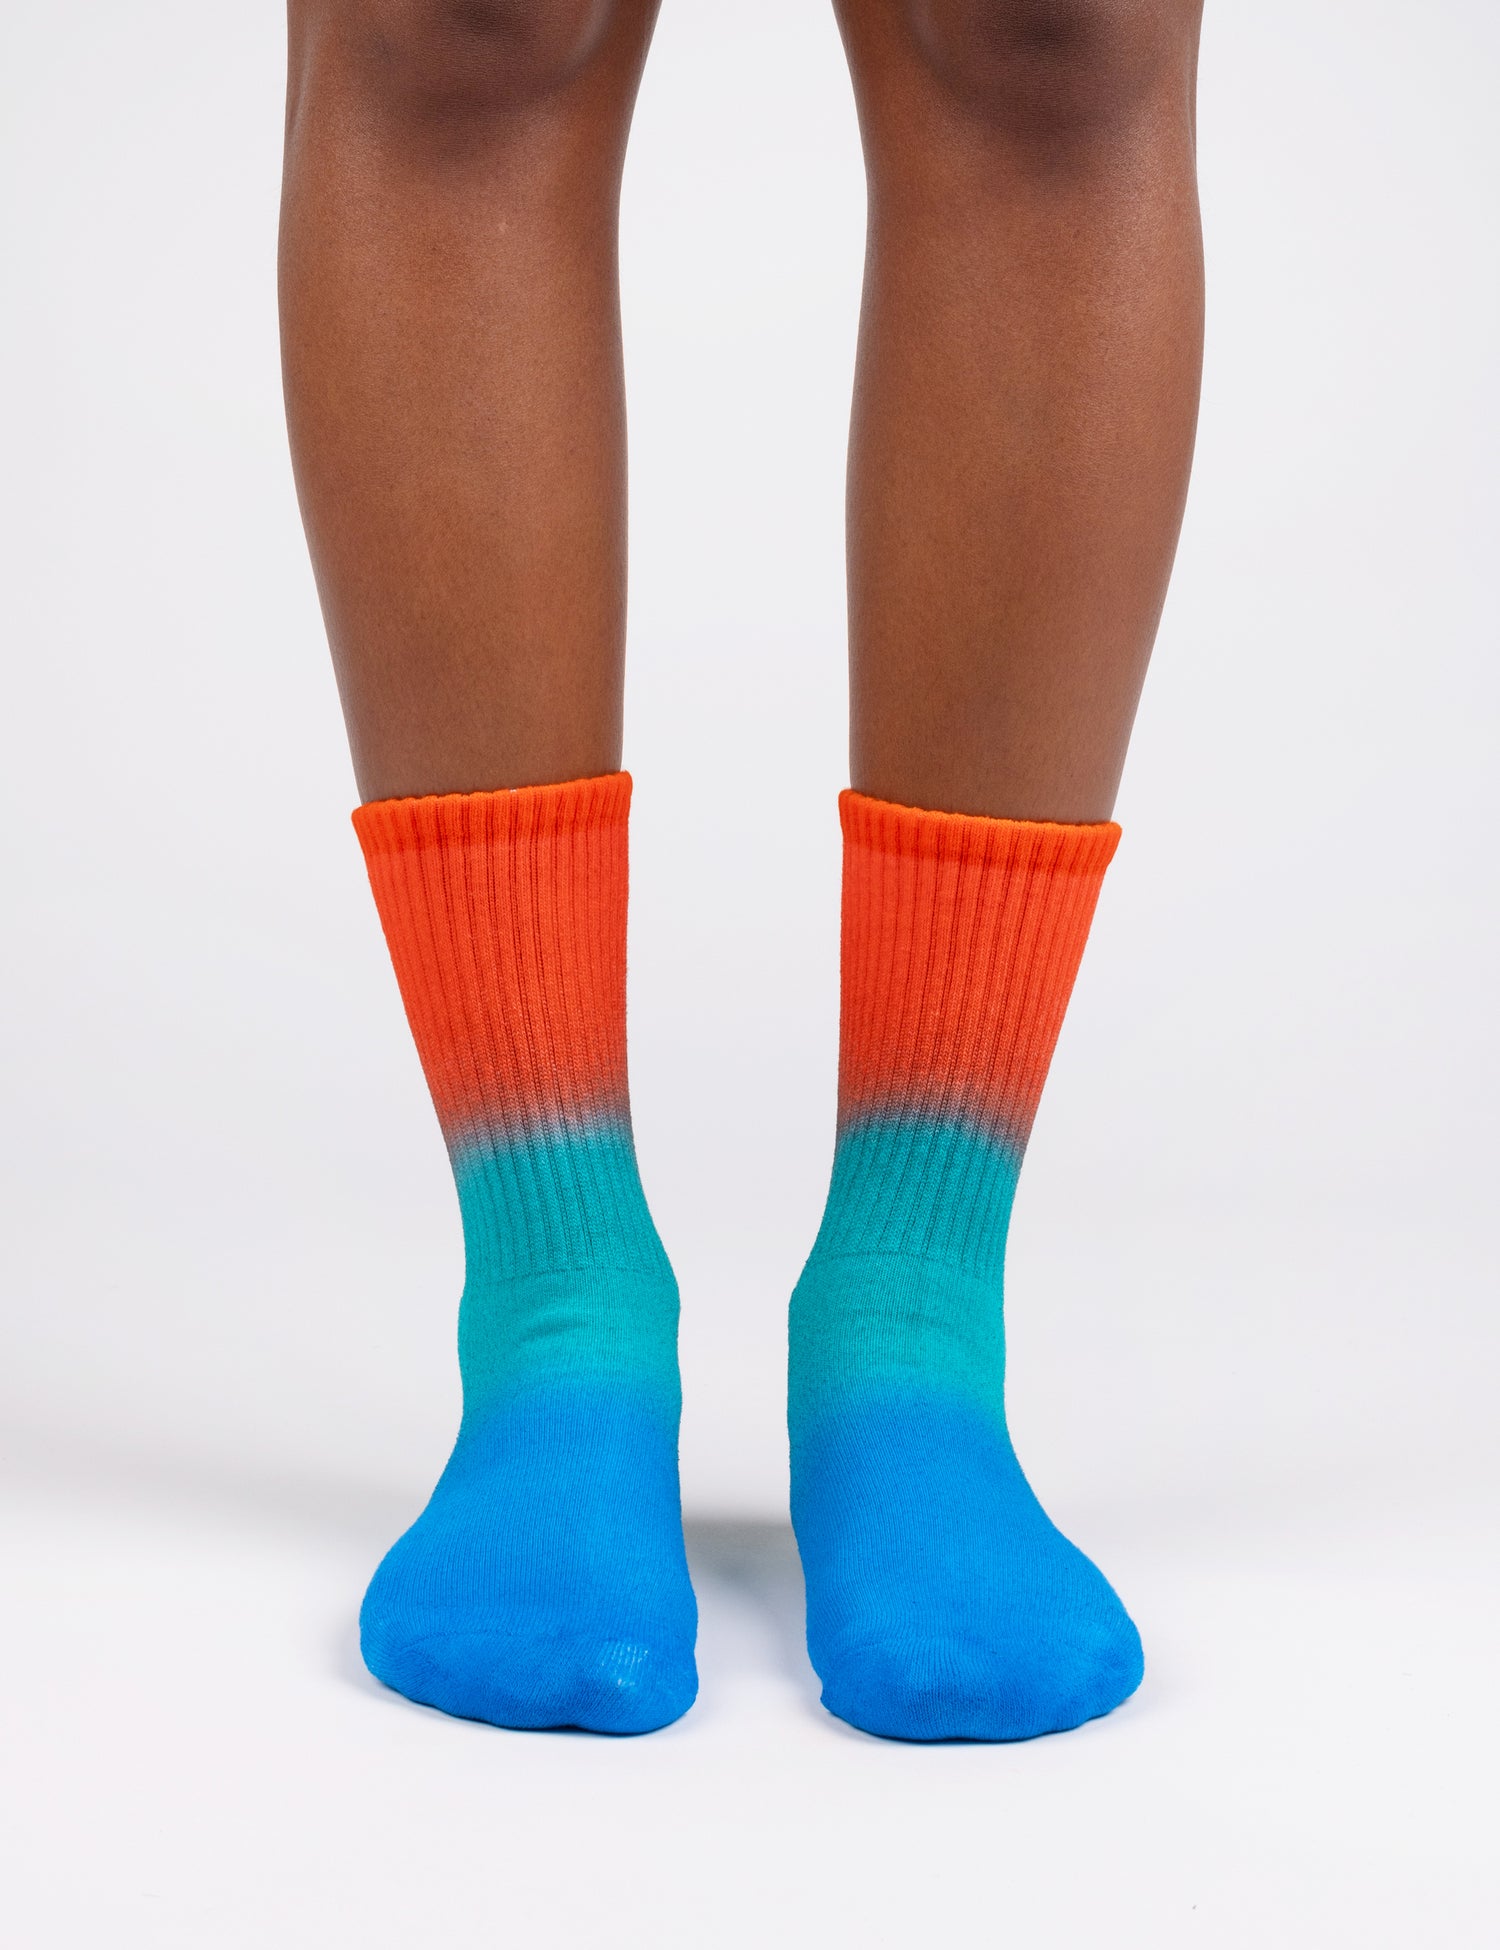 Image of feet wearing socks in gradient colors red aqua blue